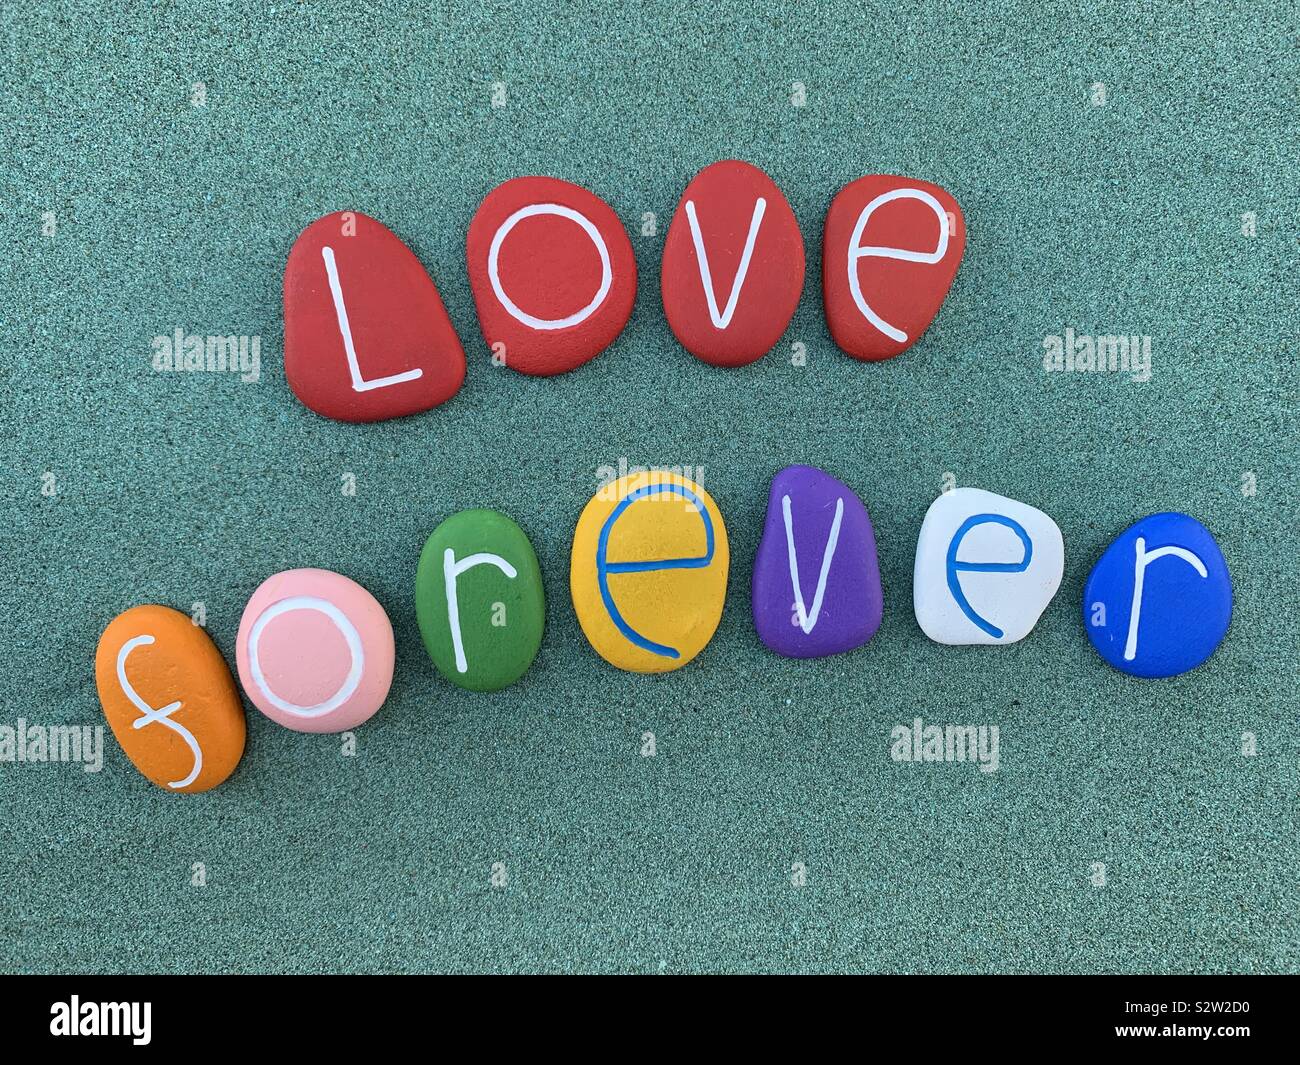 Love forever Stock Photo